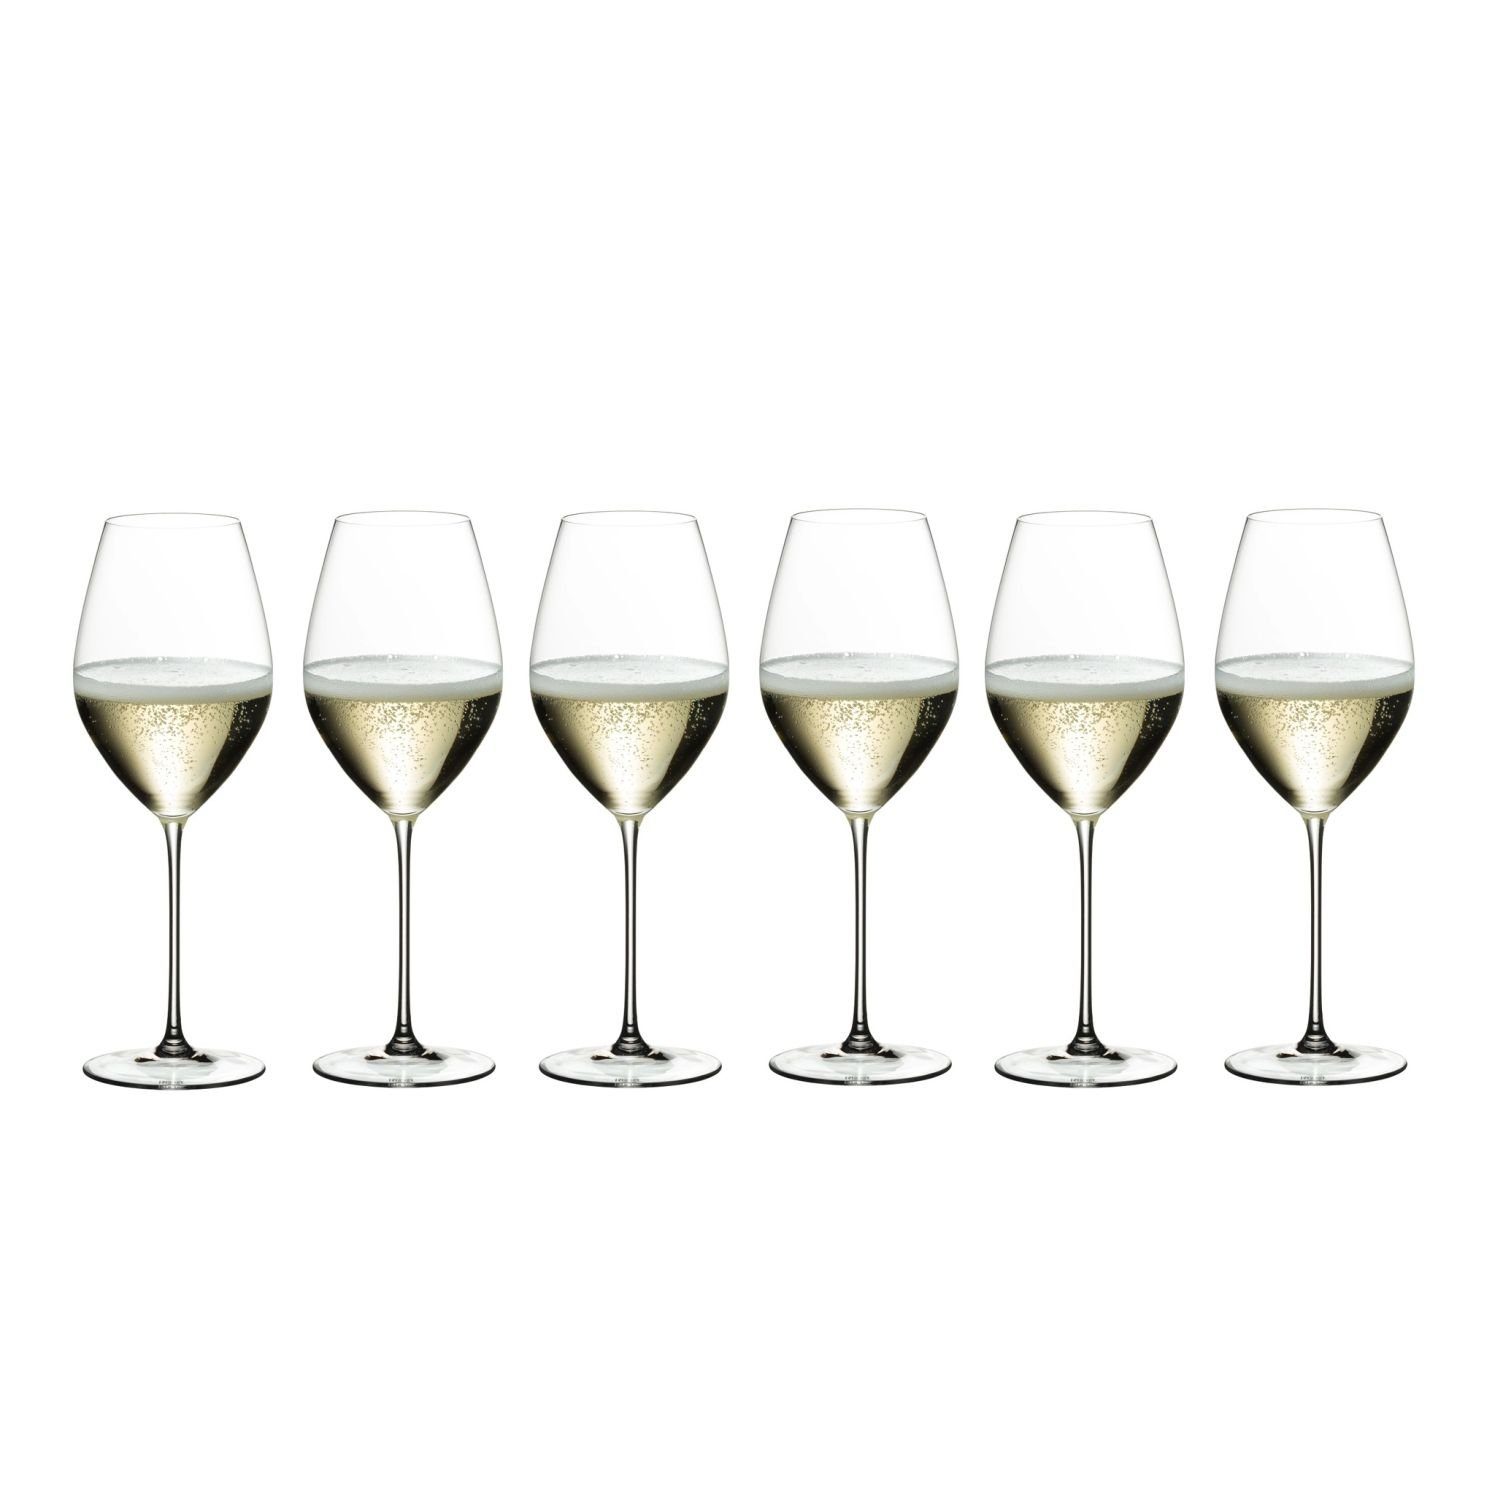 RIEDEL THE WINE GLASS COMPANY Champagnerglas Riedel Veritas Champagner Weinglas 6er Set, Kristallglas